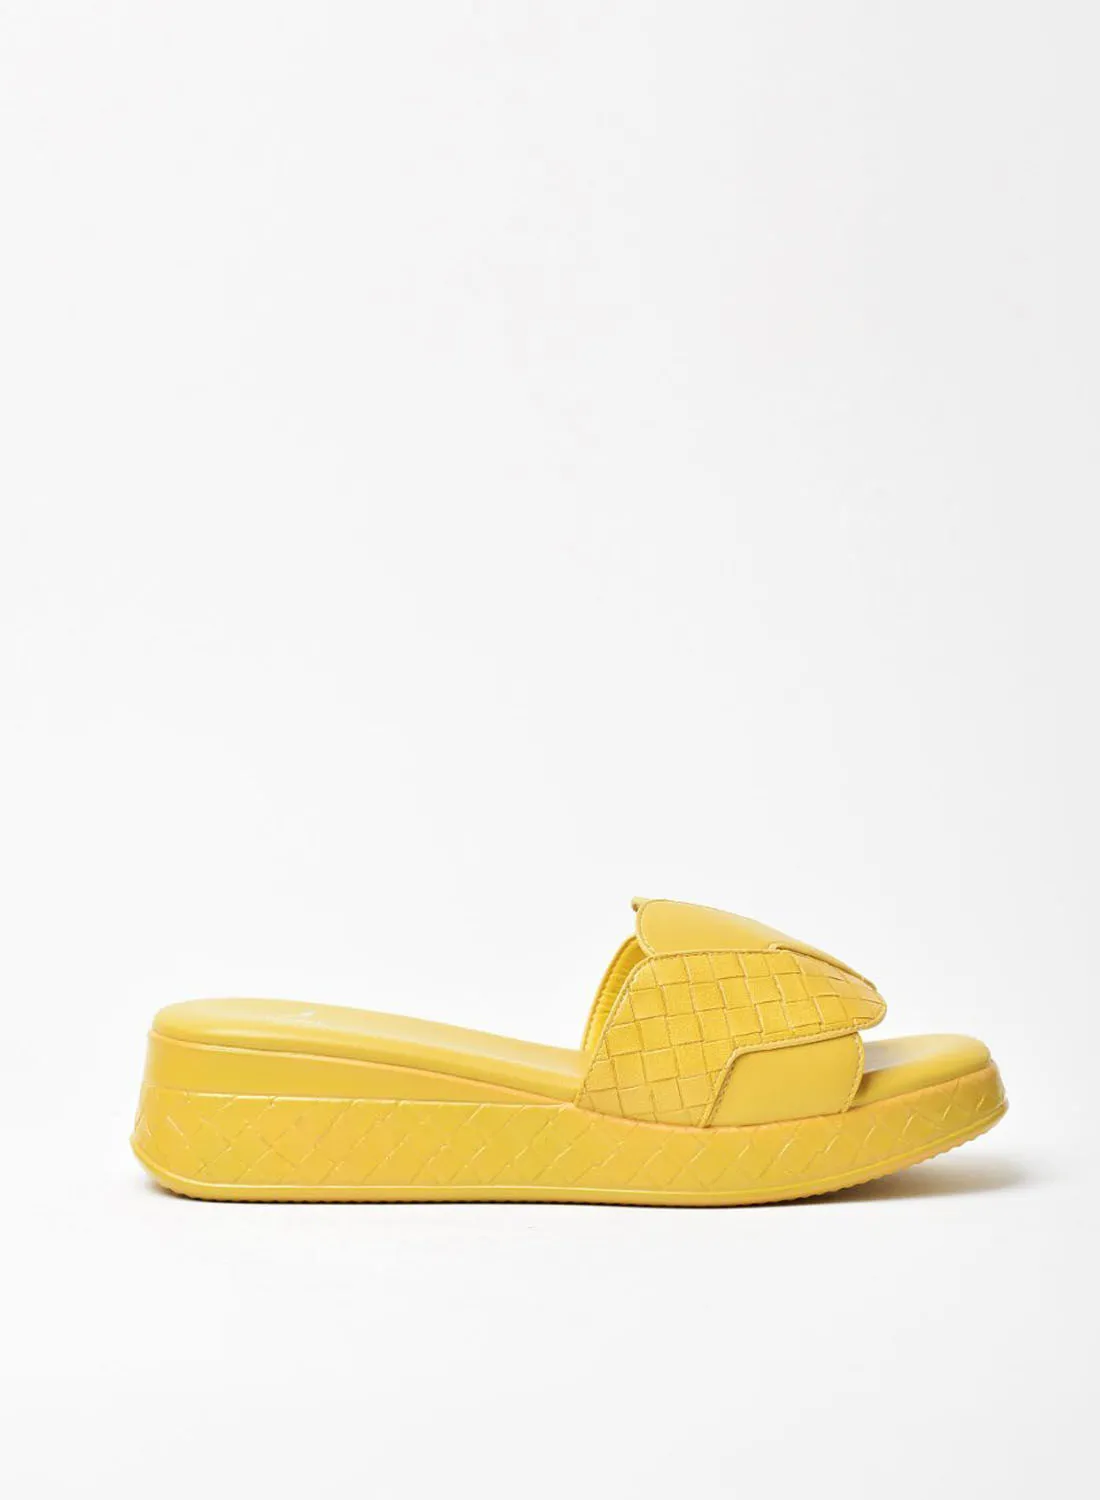 Jove Comfortable Casual Sandals Yellow